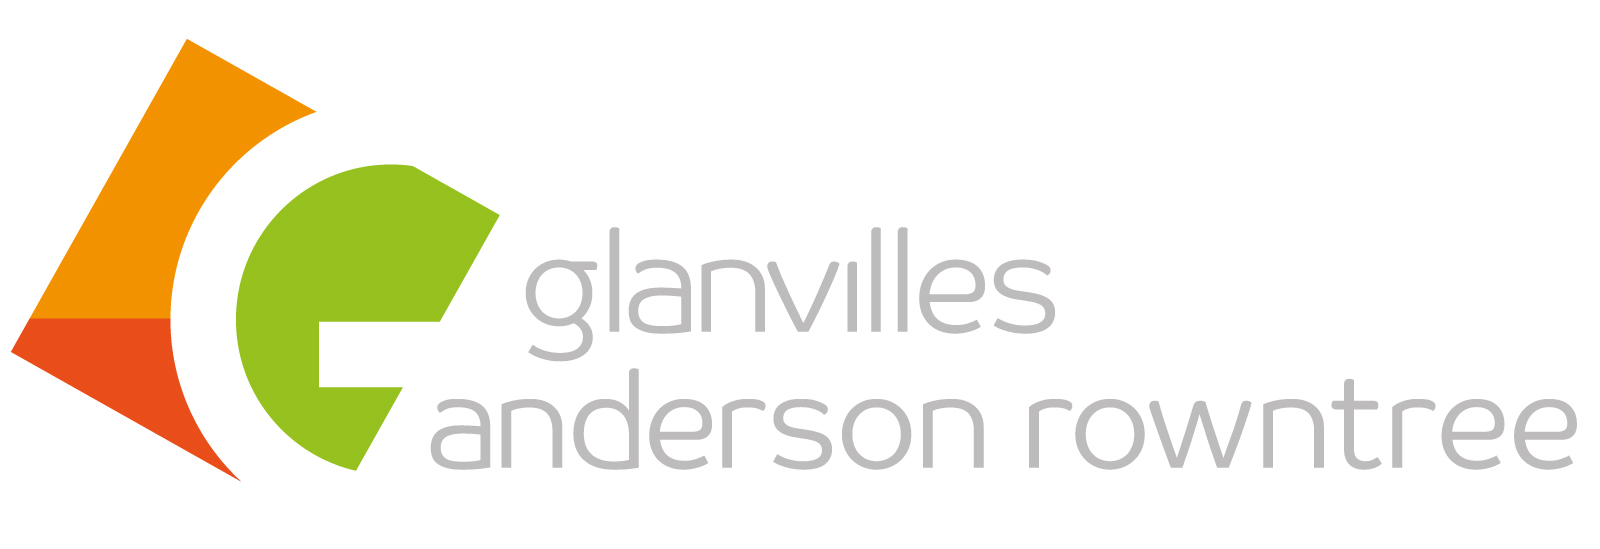 Glanvilles Anderson Rowntree